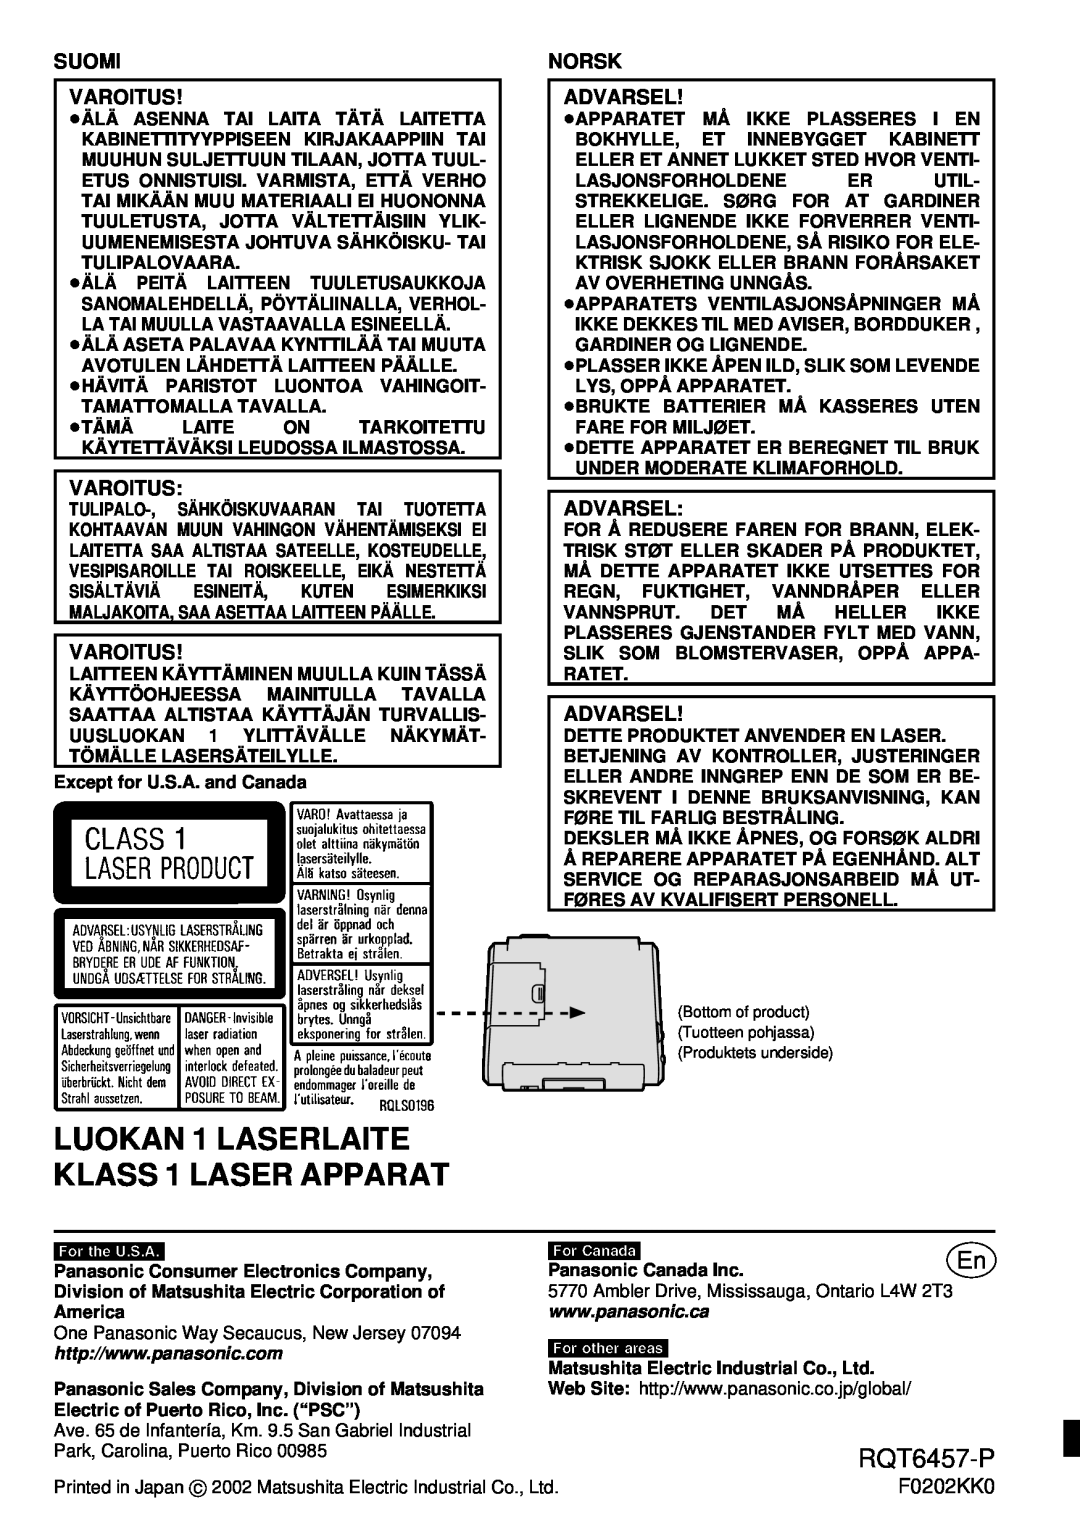 Panasonic SV-SR100 operating instructions LUOKAN 1 LASERLAITE KLASS 1 LASER APPARAT, RQT6457-P, F0202KK0, For\Canada 